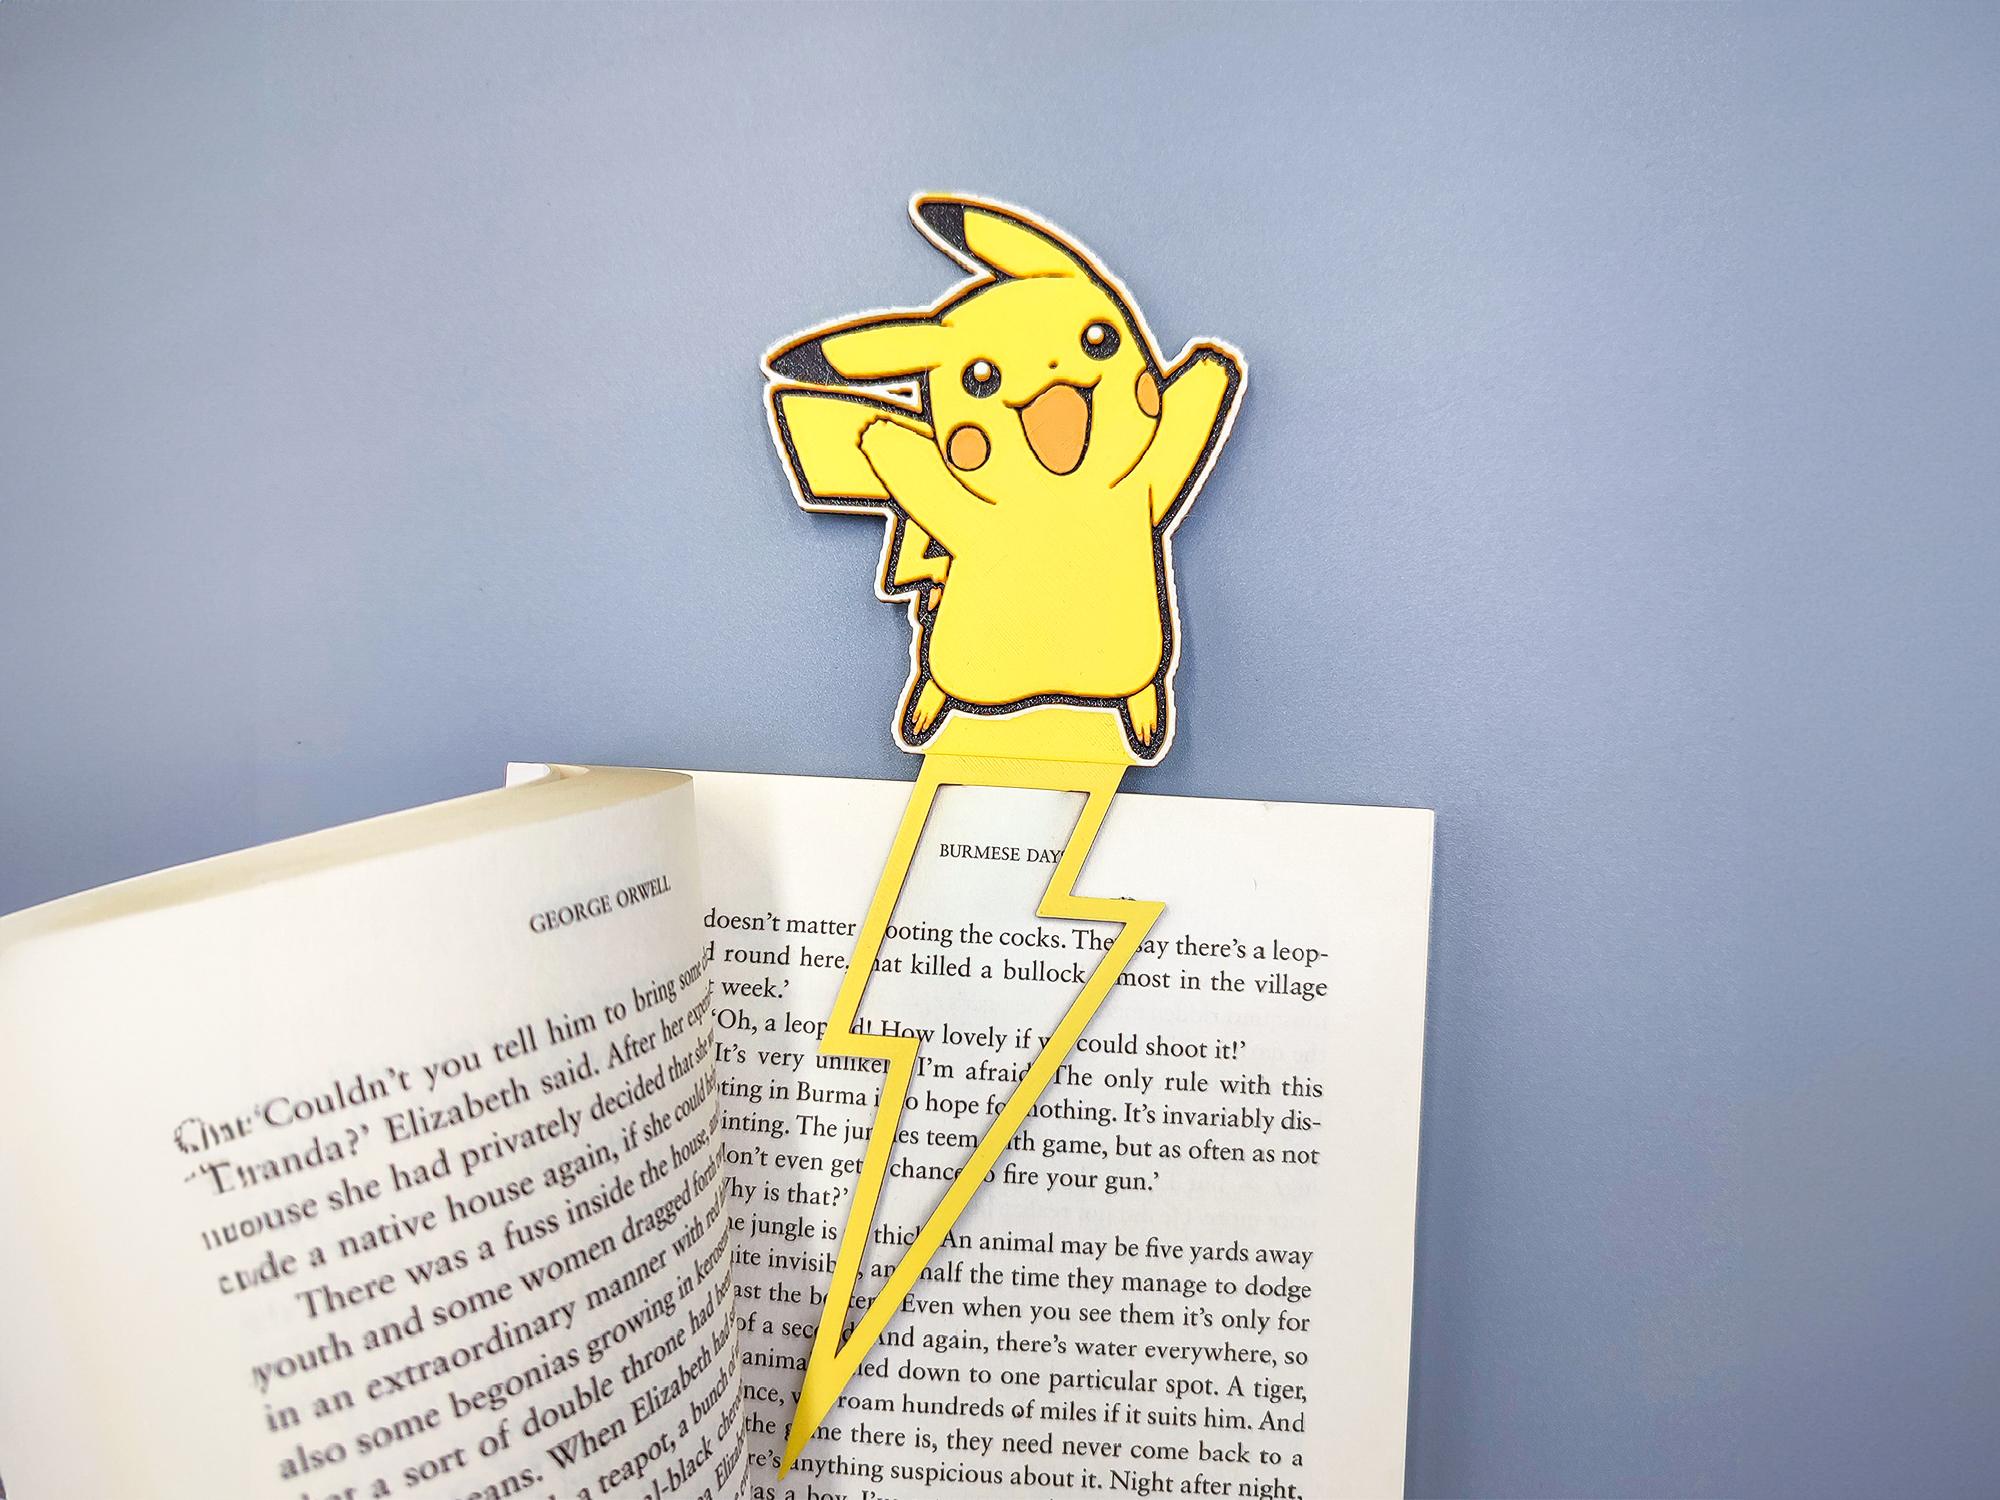 Pikachu Bookmark 3d model